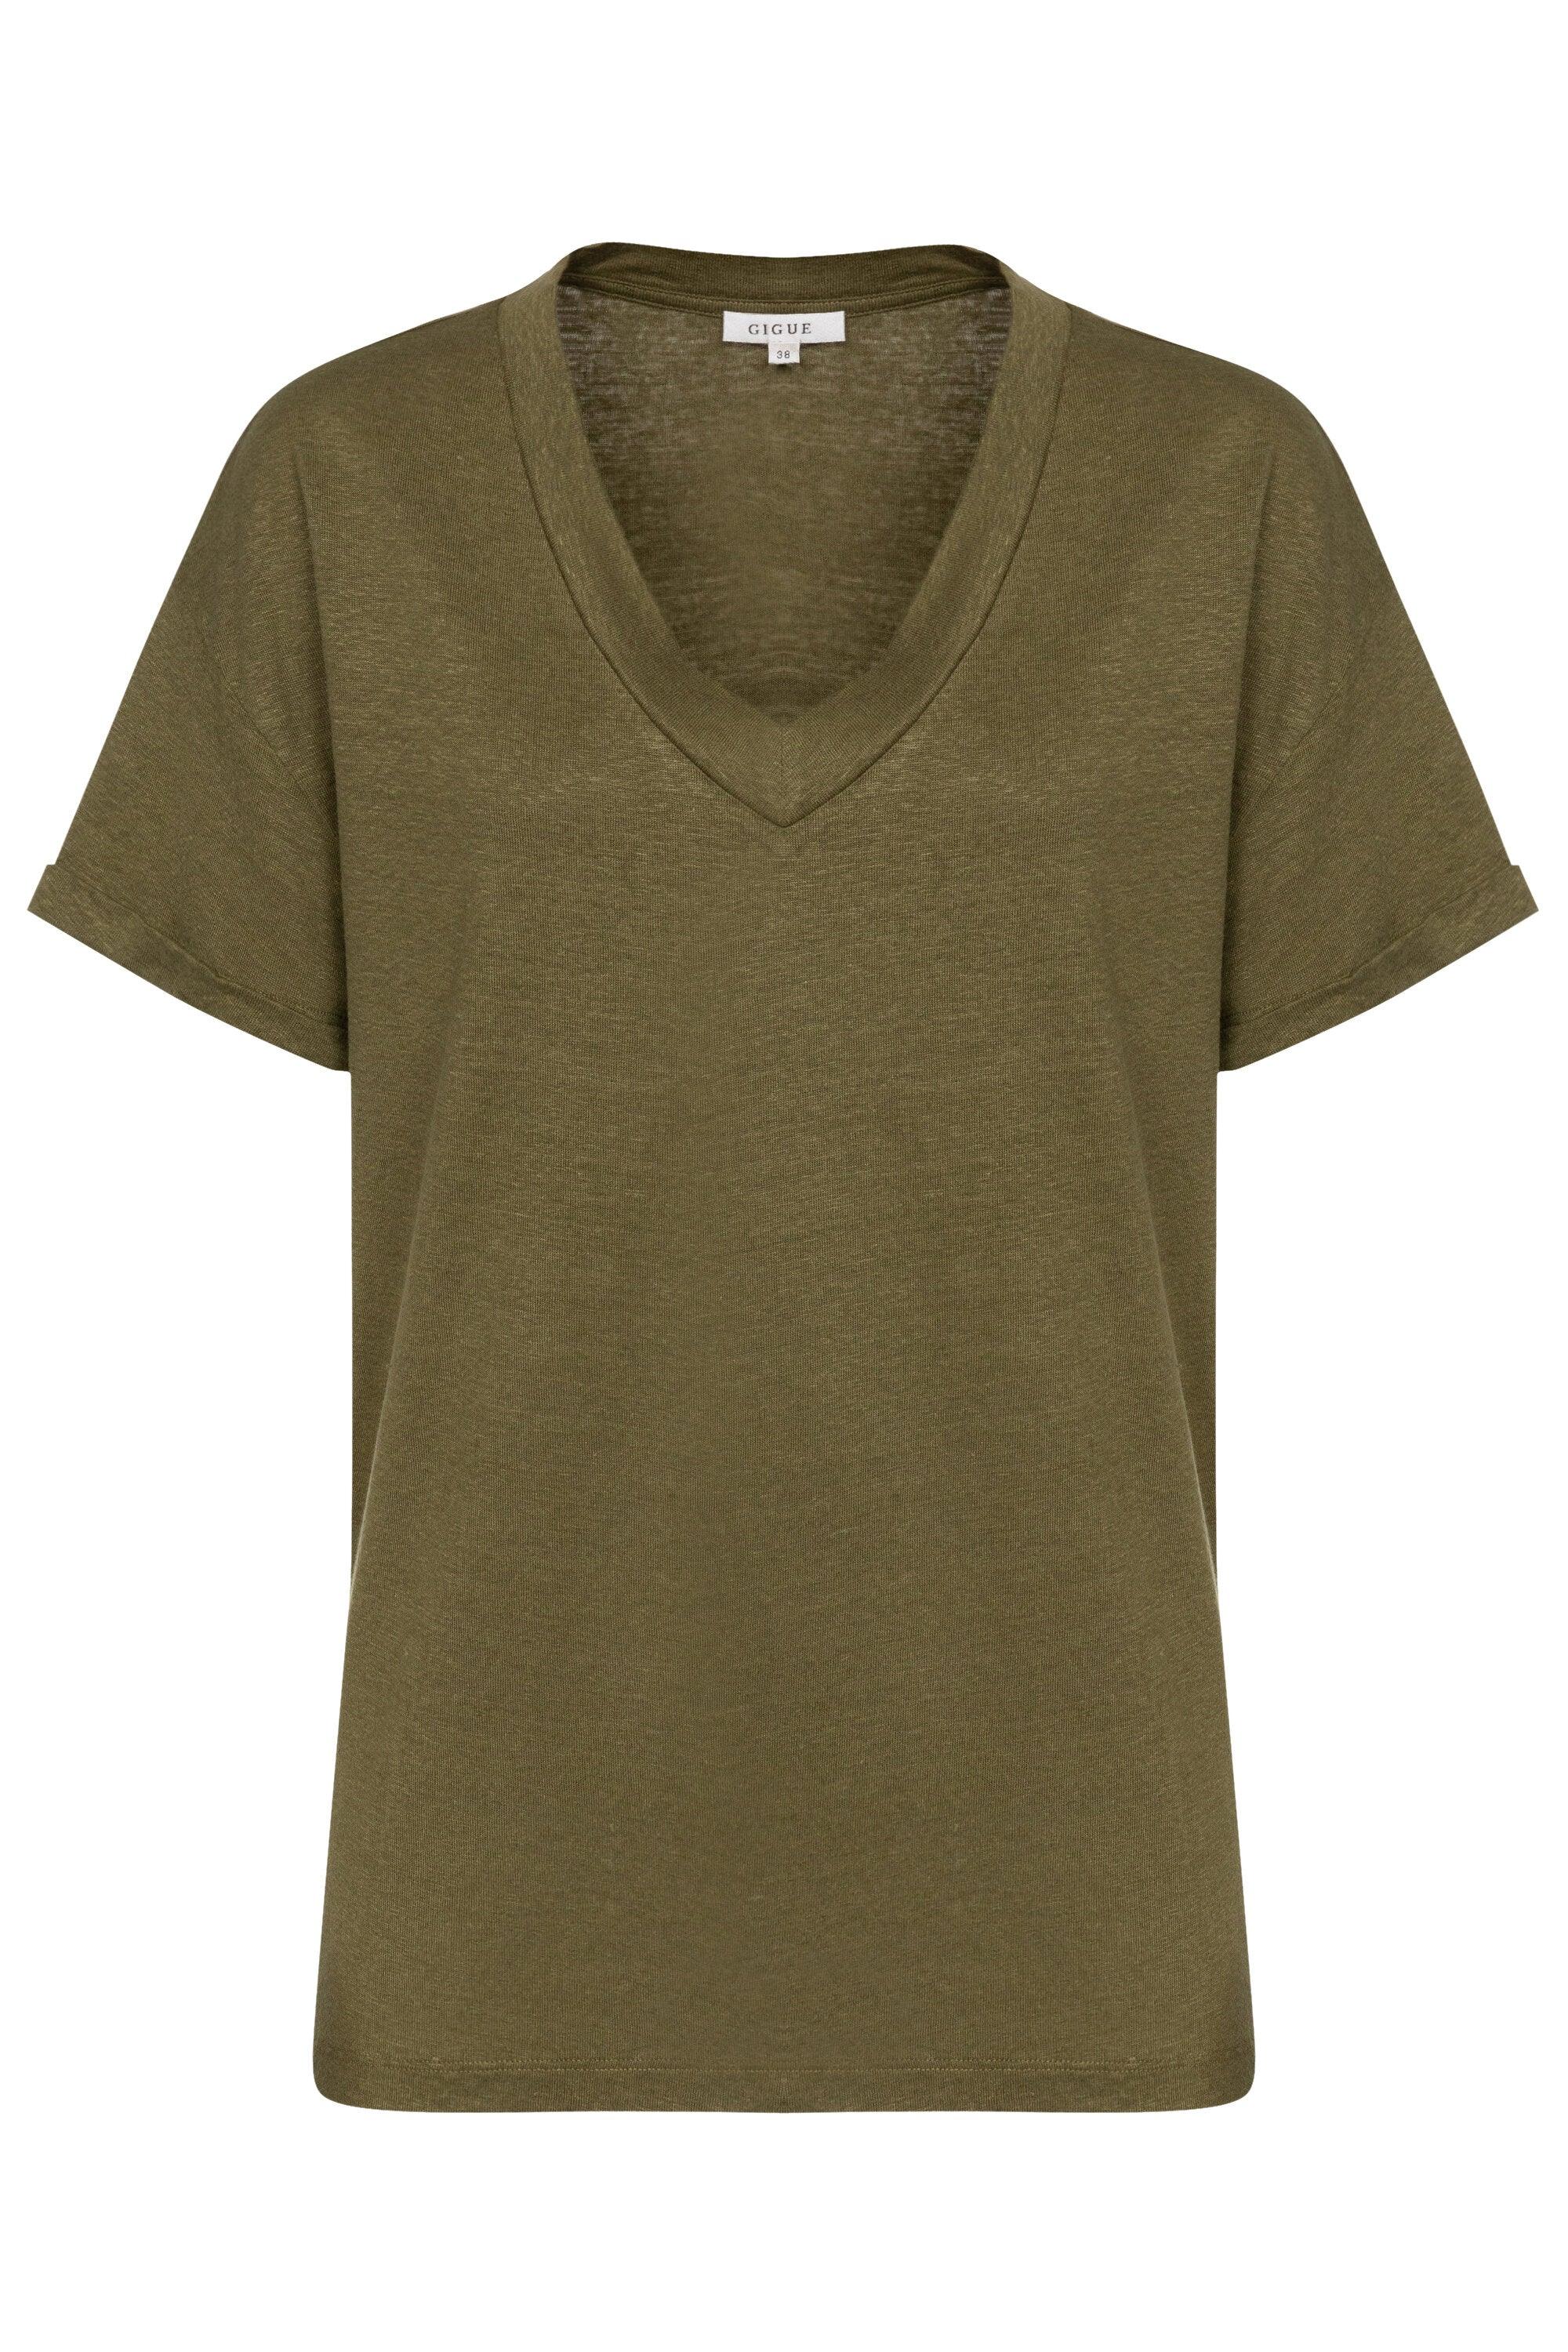 T-Shirt Olijfgroen Gigue ( Sene/2571 ) - Delaere Womenswear